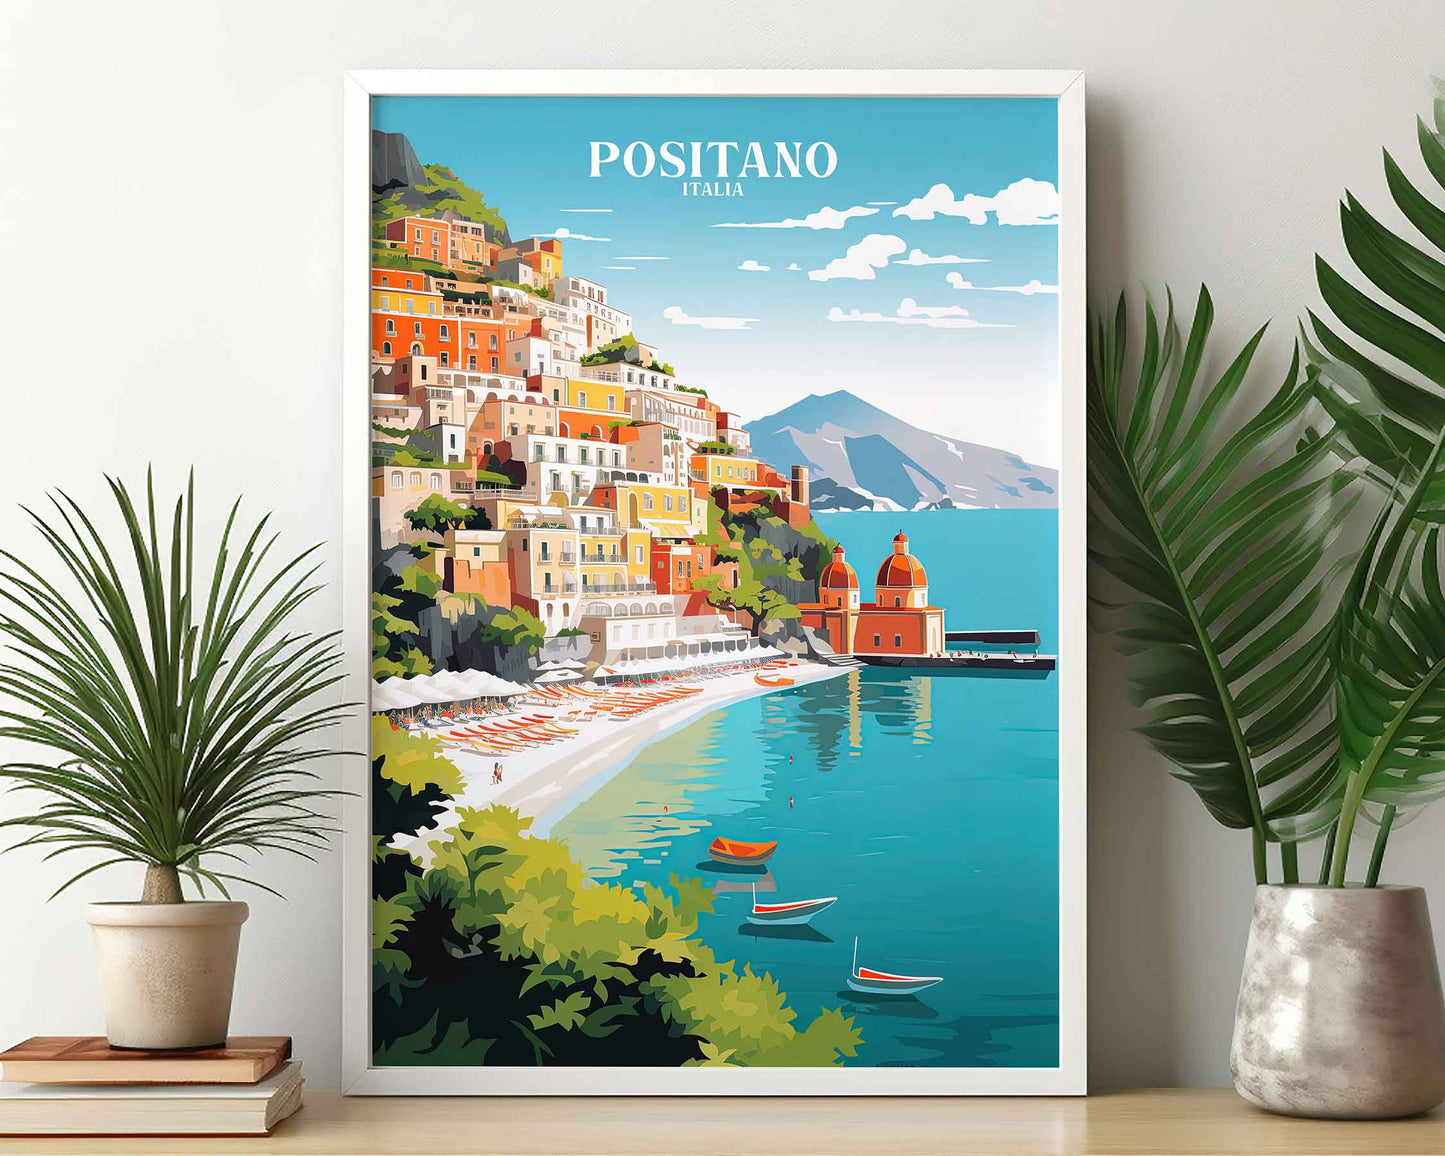 Framed Image of Positano Italy Wall Art Print Travel Posters Illustration